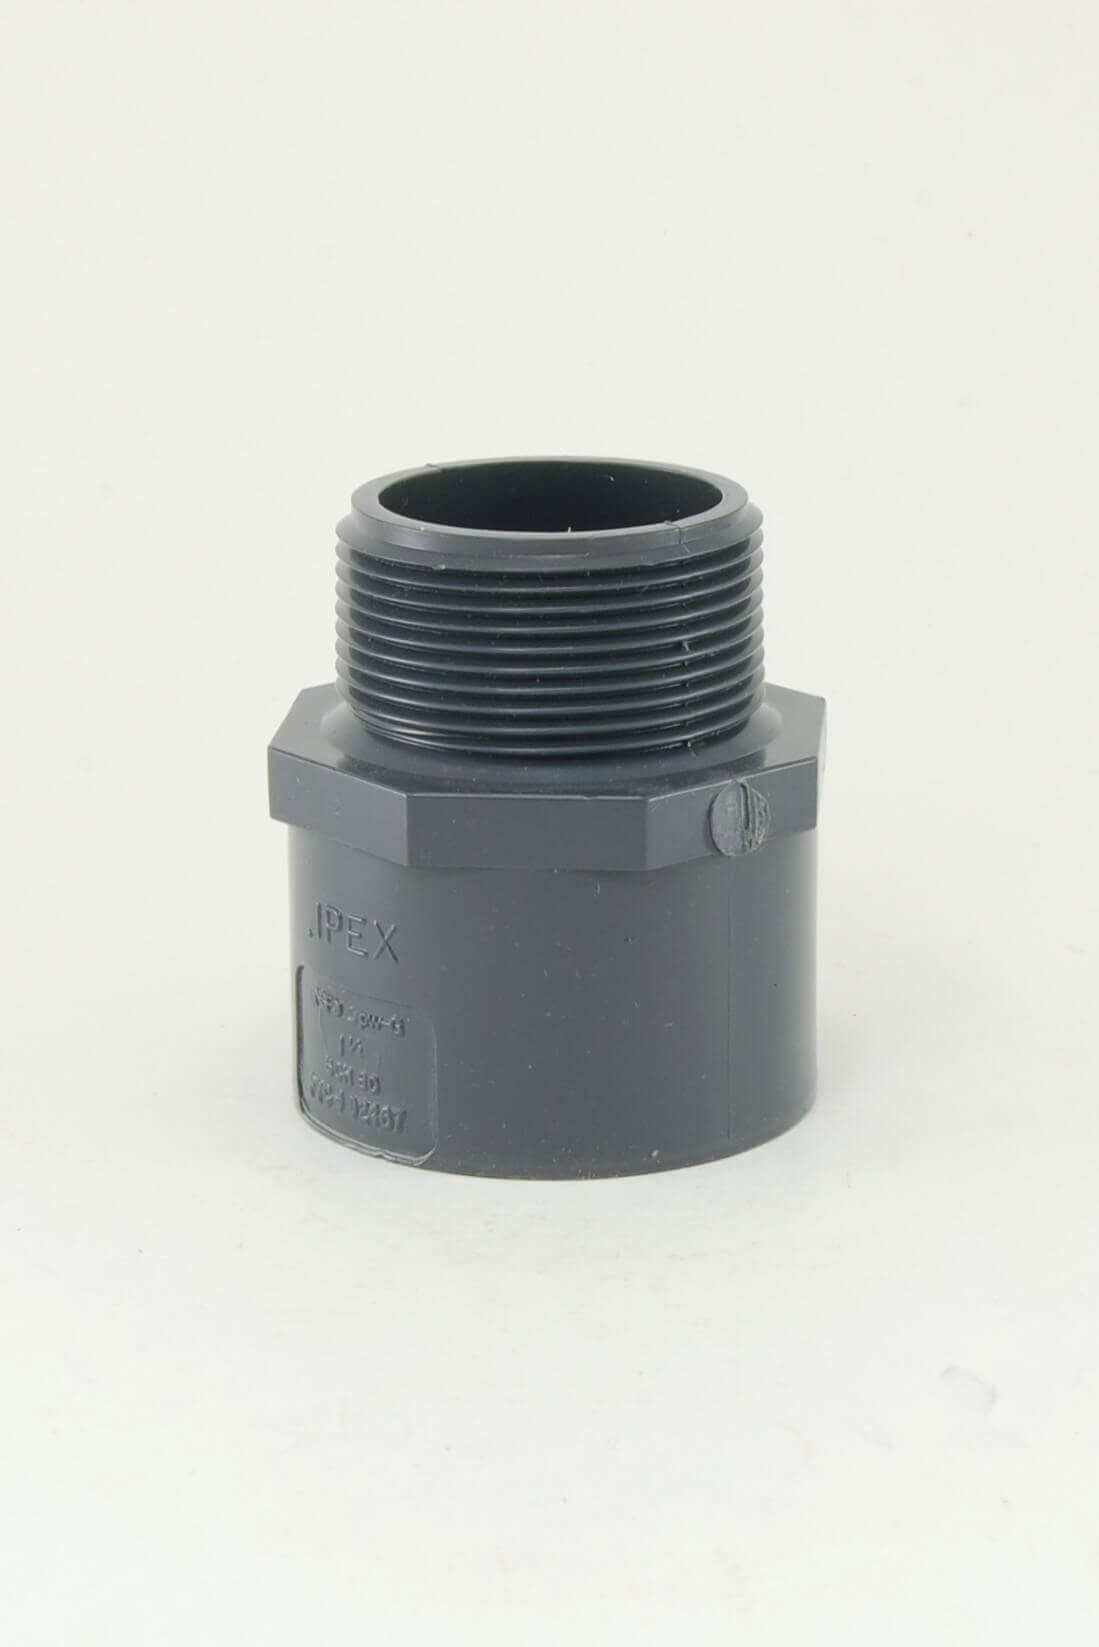 Sch 80 Grey PVC Male Adapter